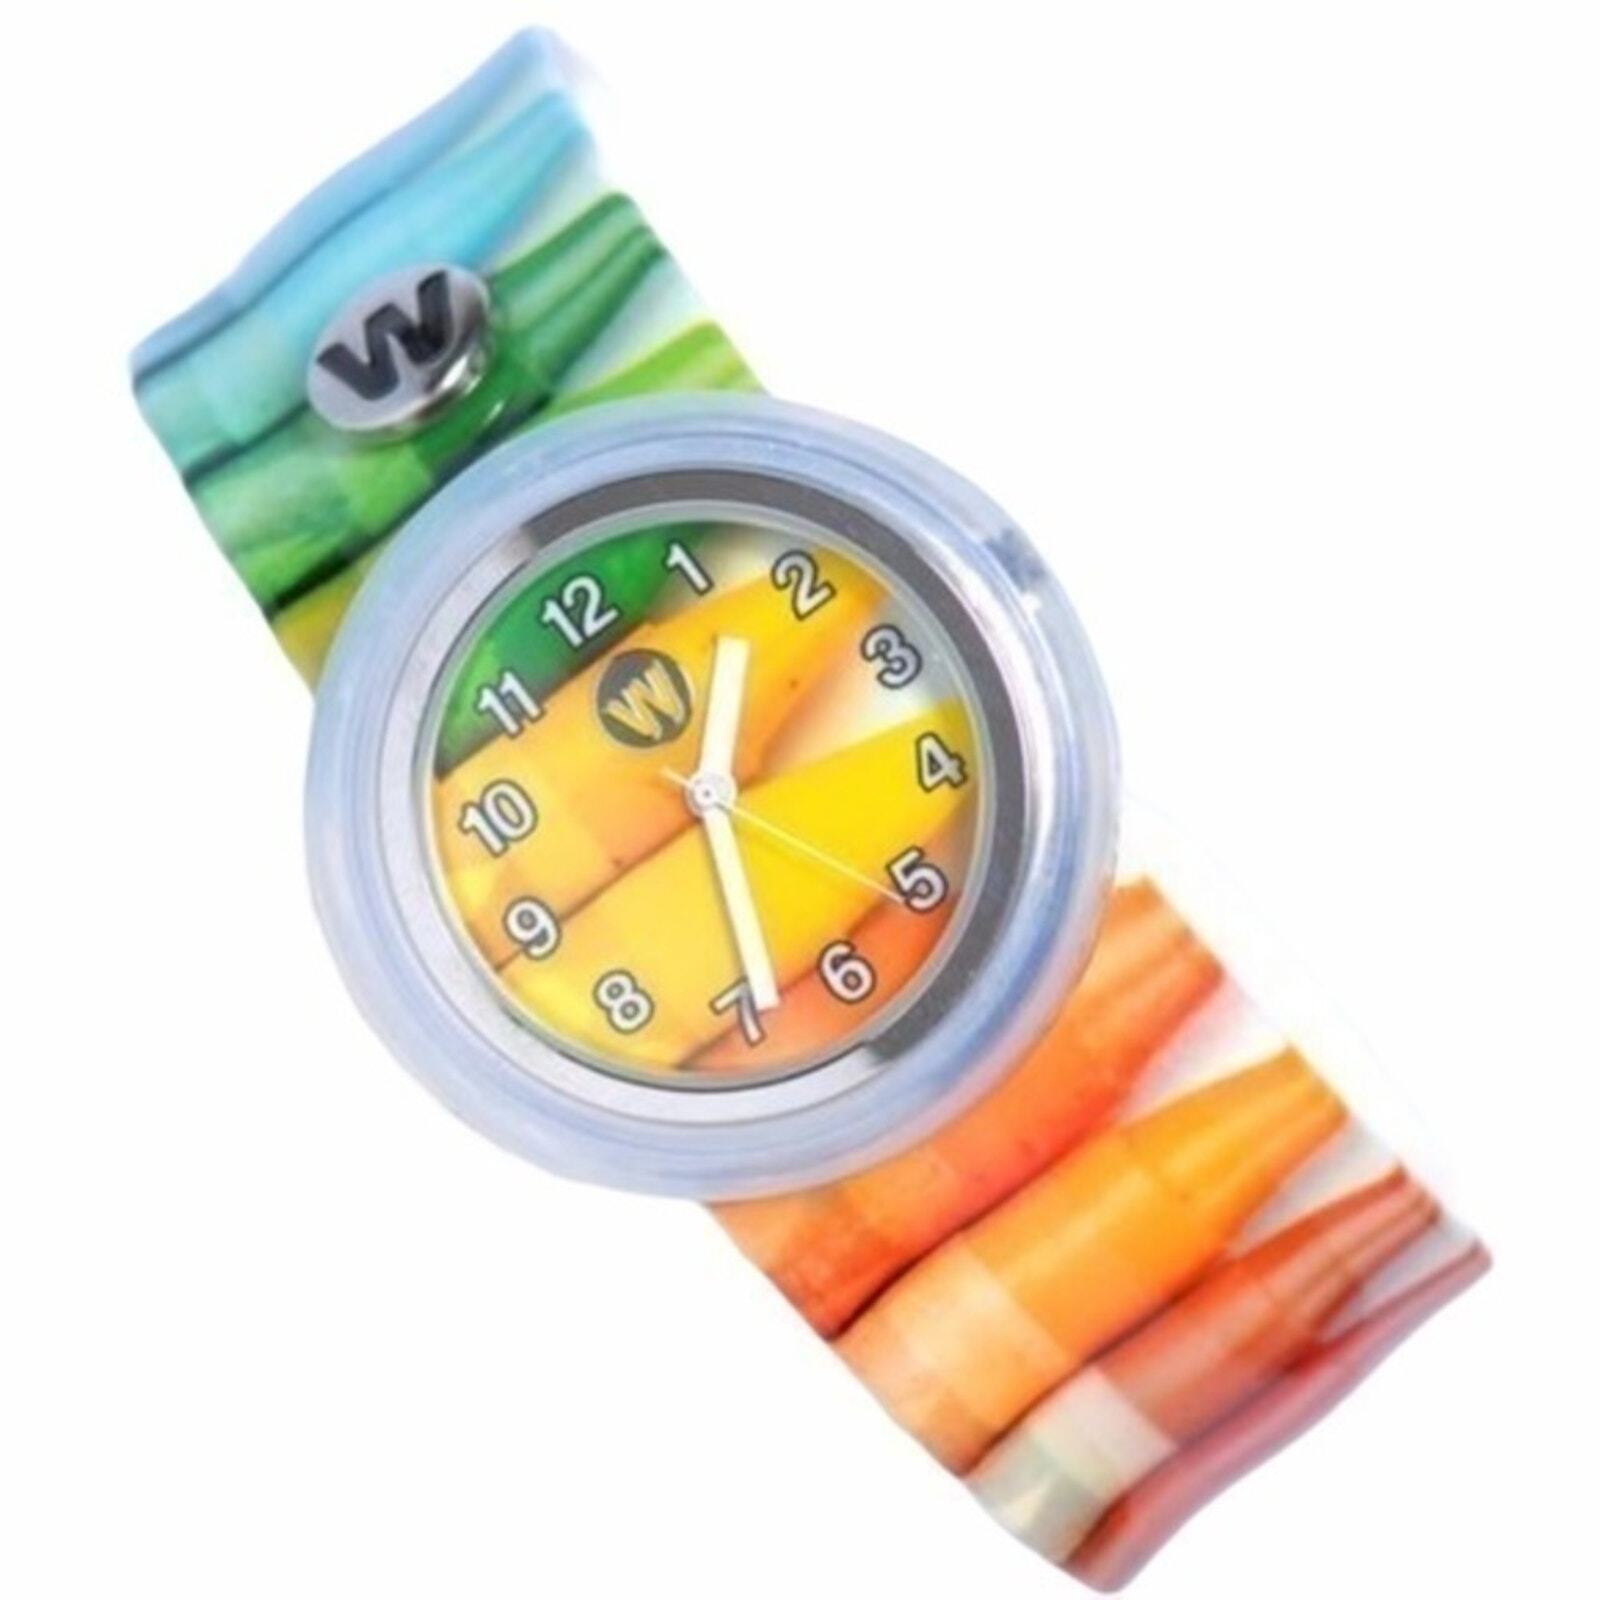 Watchitude Limited Edition Rainbow Crayons Slap Watch Brand New